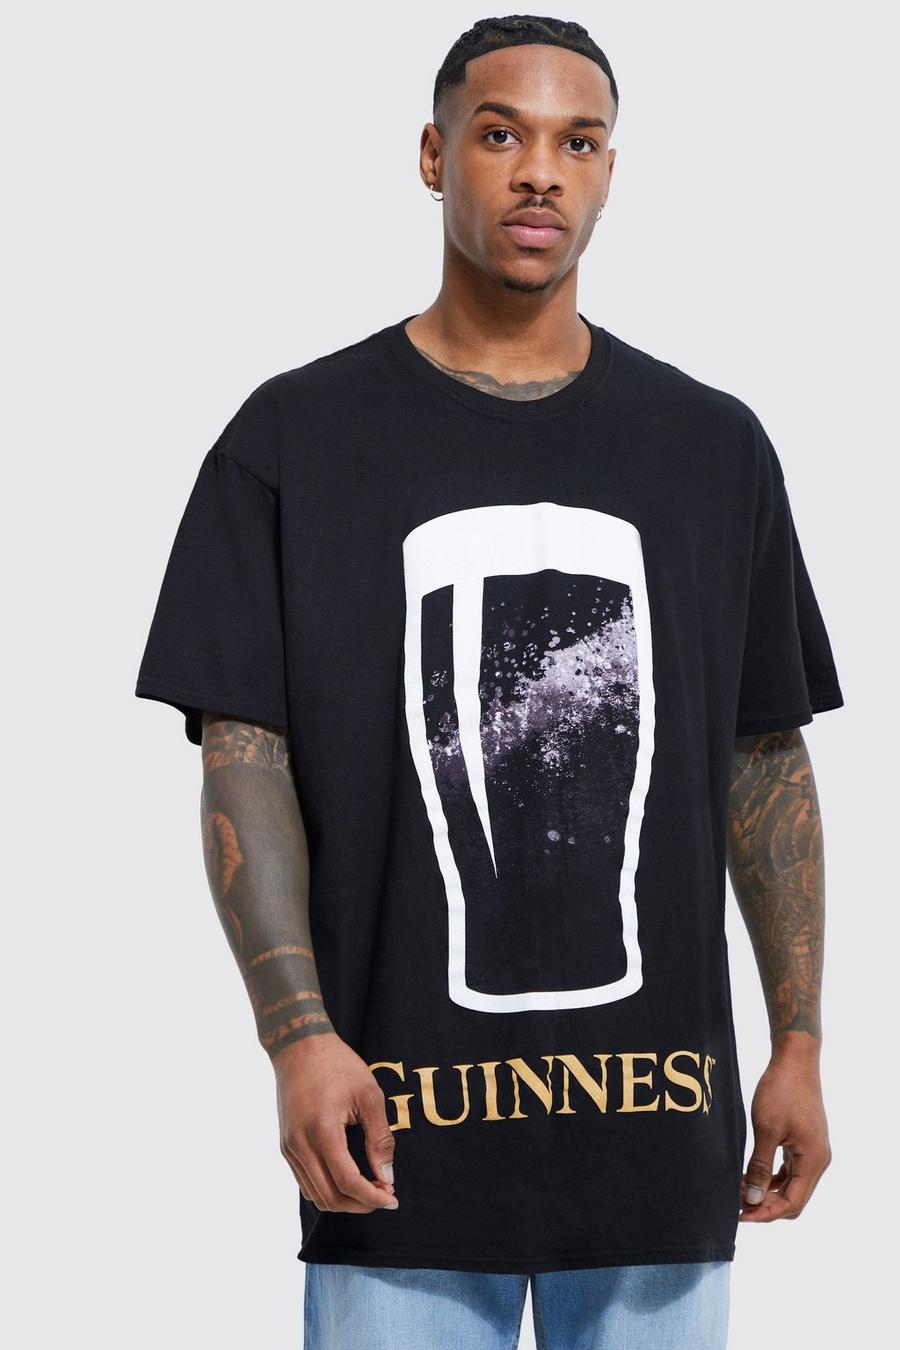 Black Oversized Guinness License T-shirt image number 1